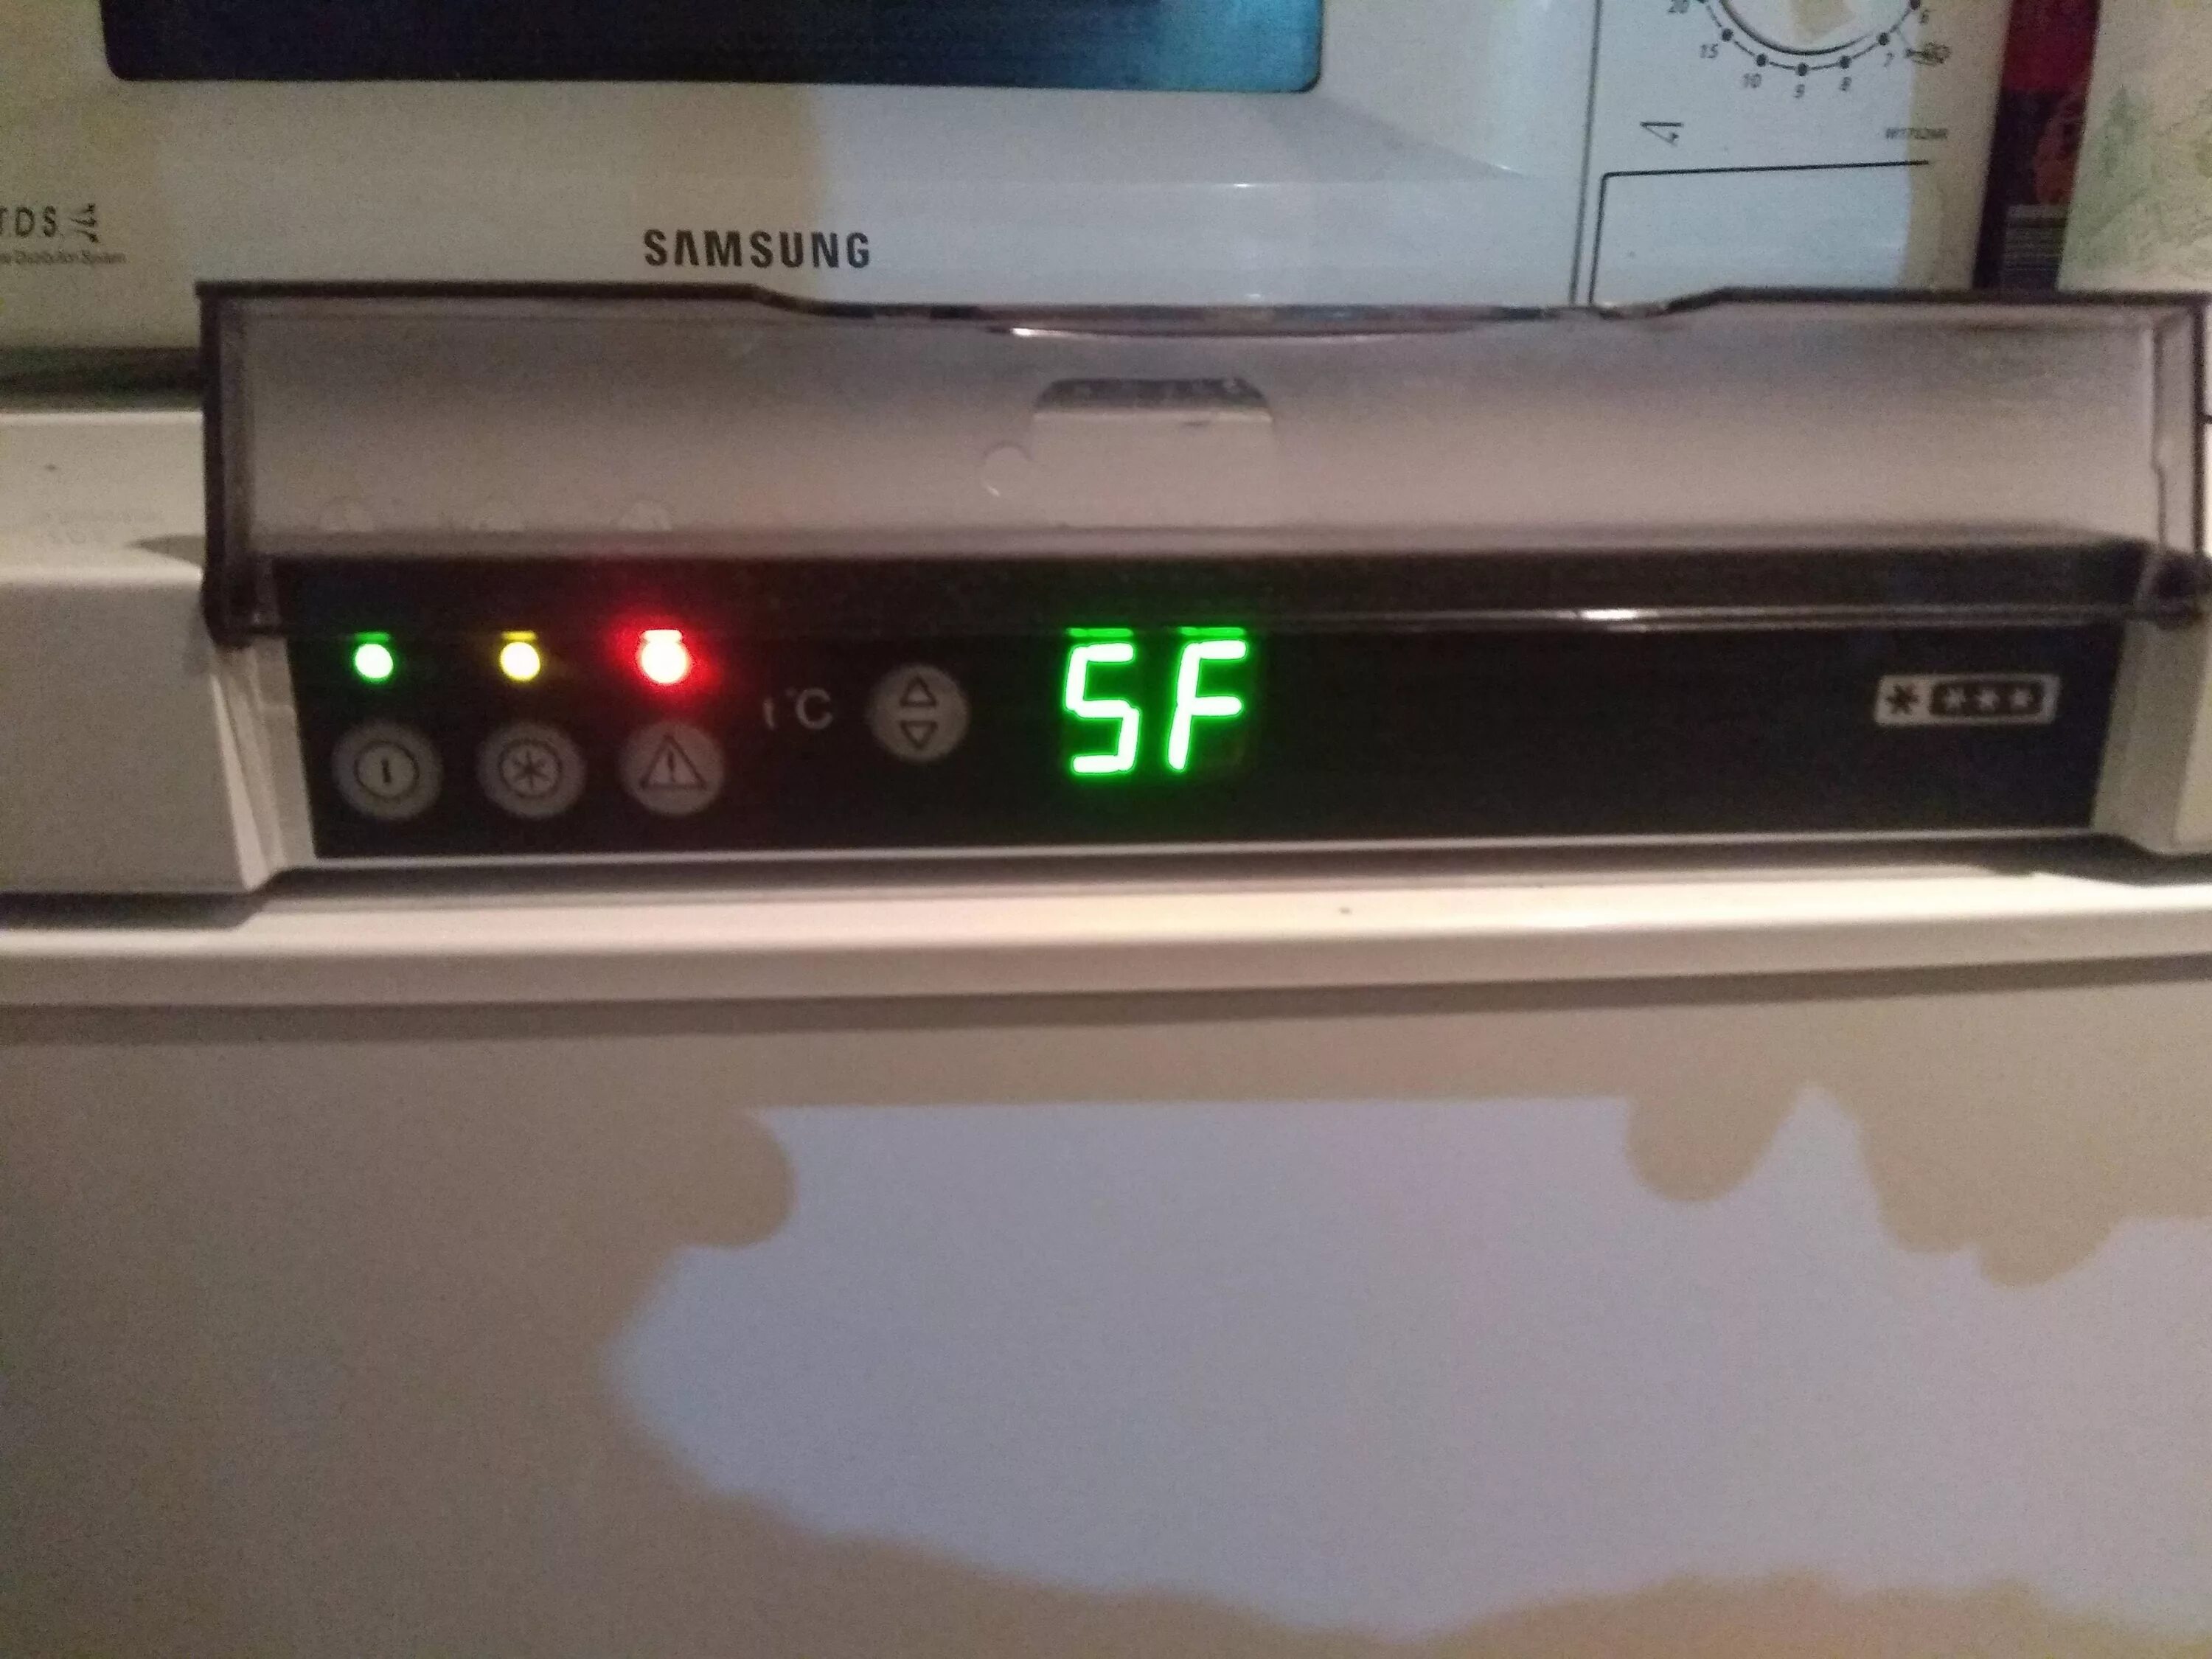 5f холодильник Атлант. F5 холодильник Атлант резистор. Холодильник Атлант двухкамерный ошибка 5f. Атлант холодильник ошибка f2. Морозилка атлант горит